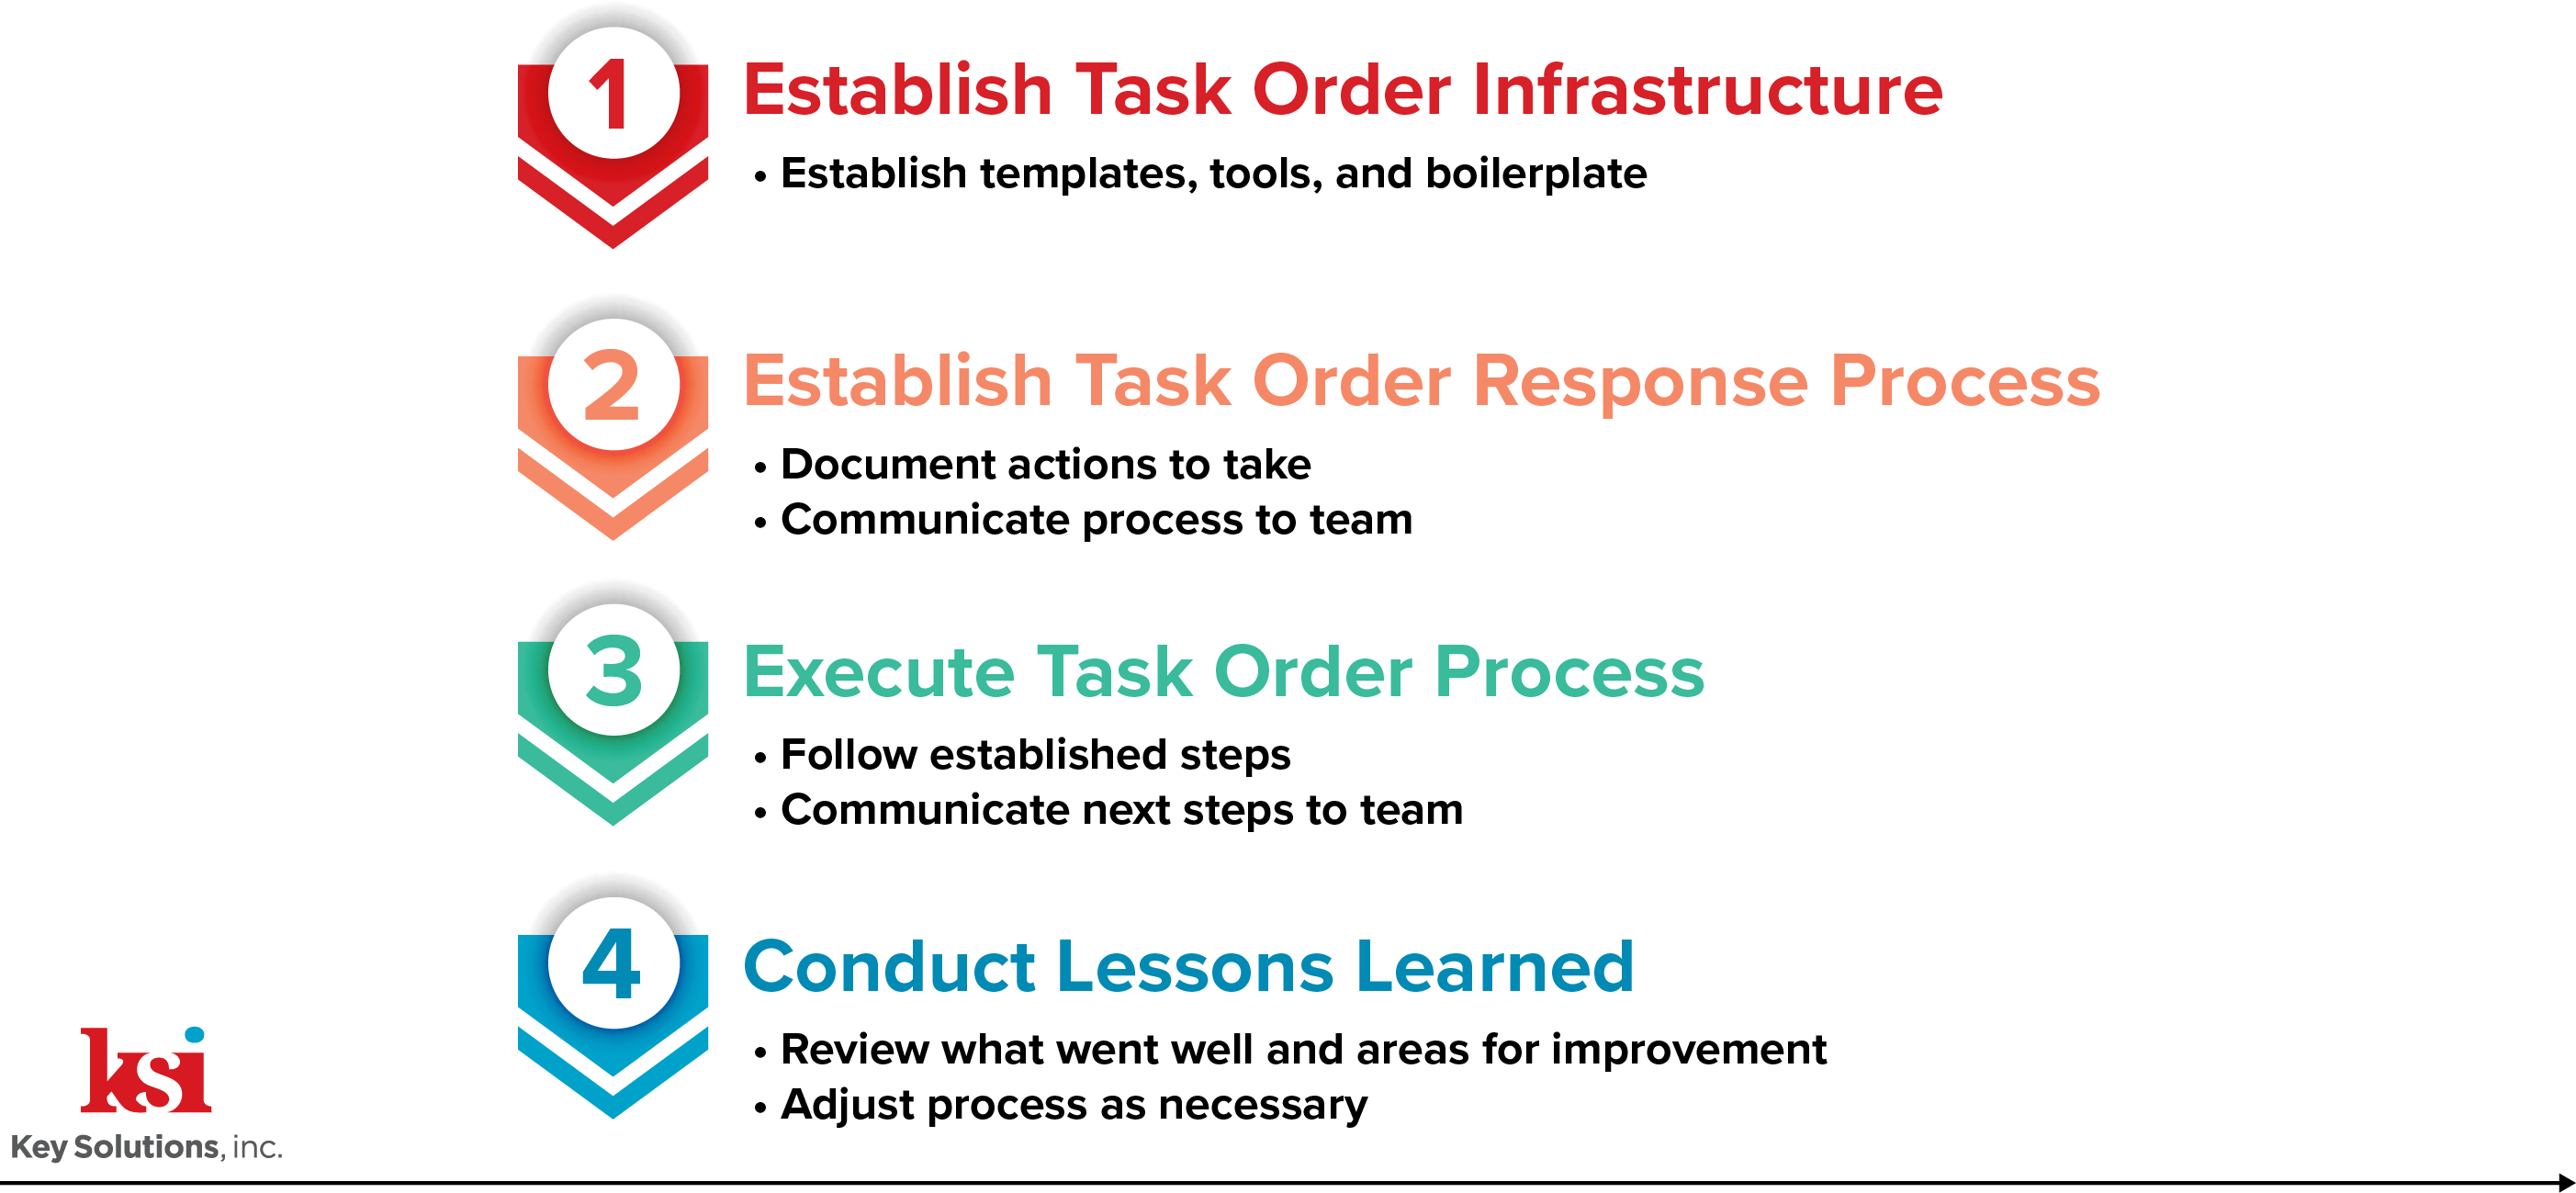 Establishing an Effective Task Order Response Process